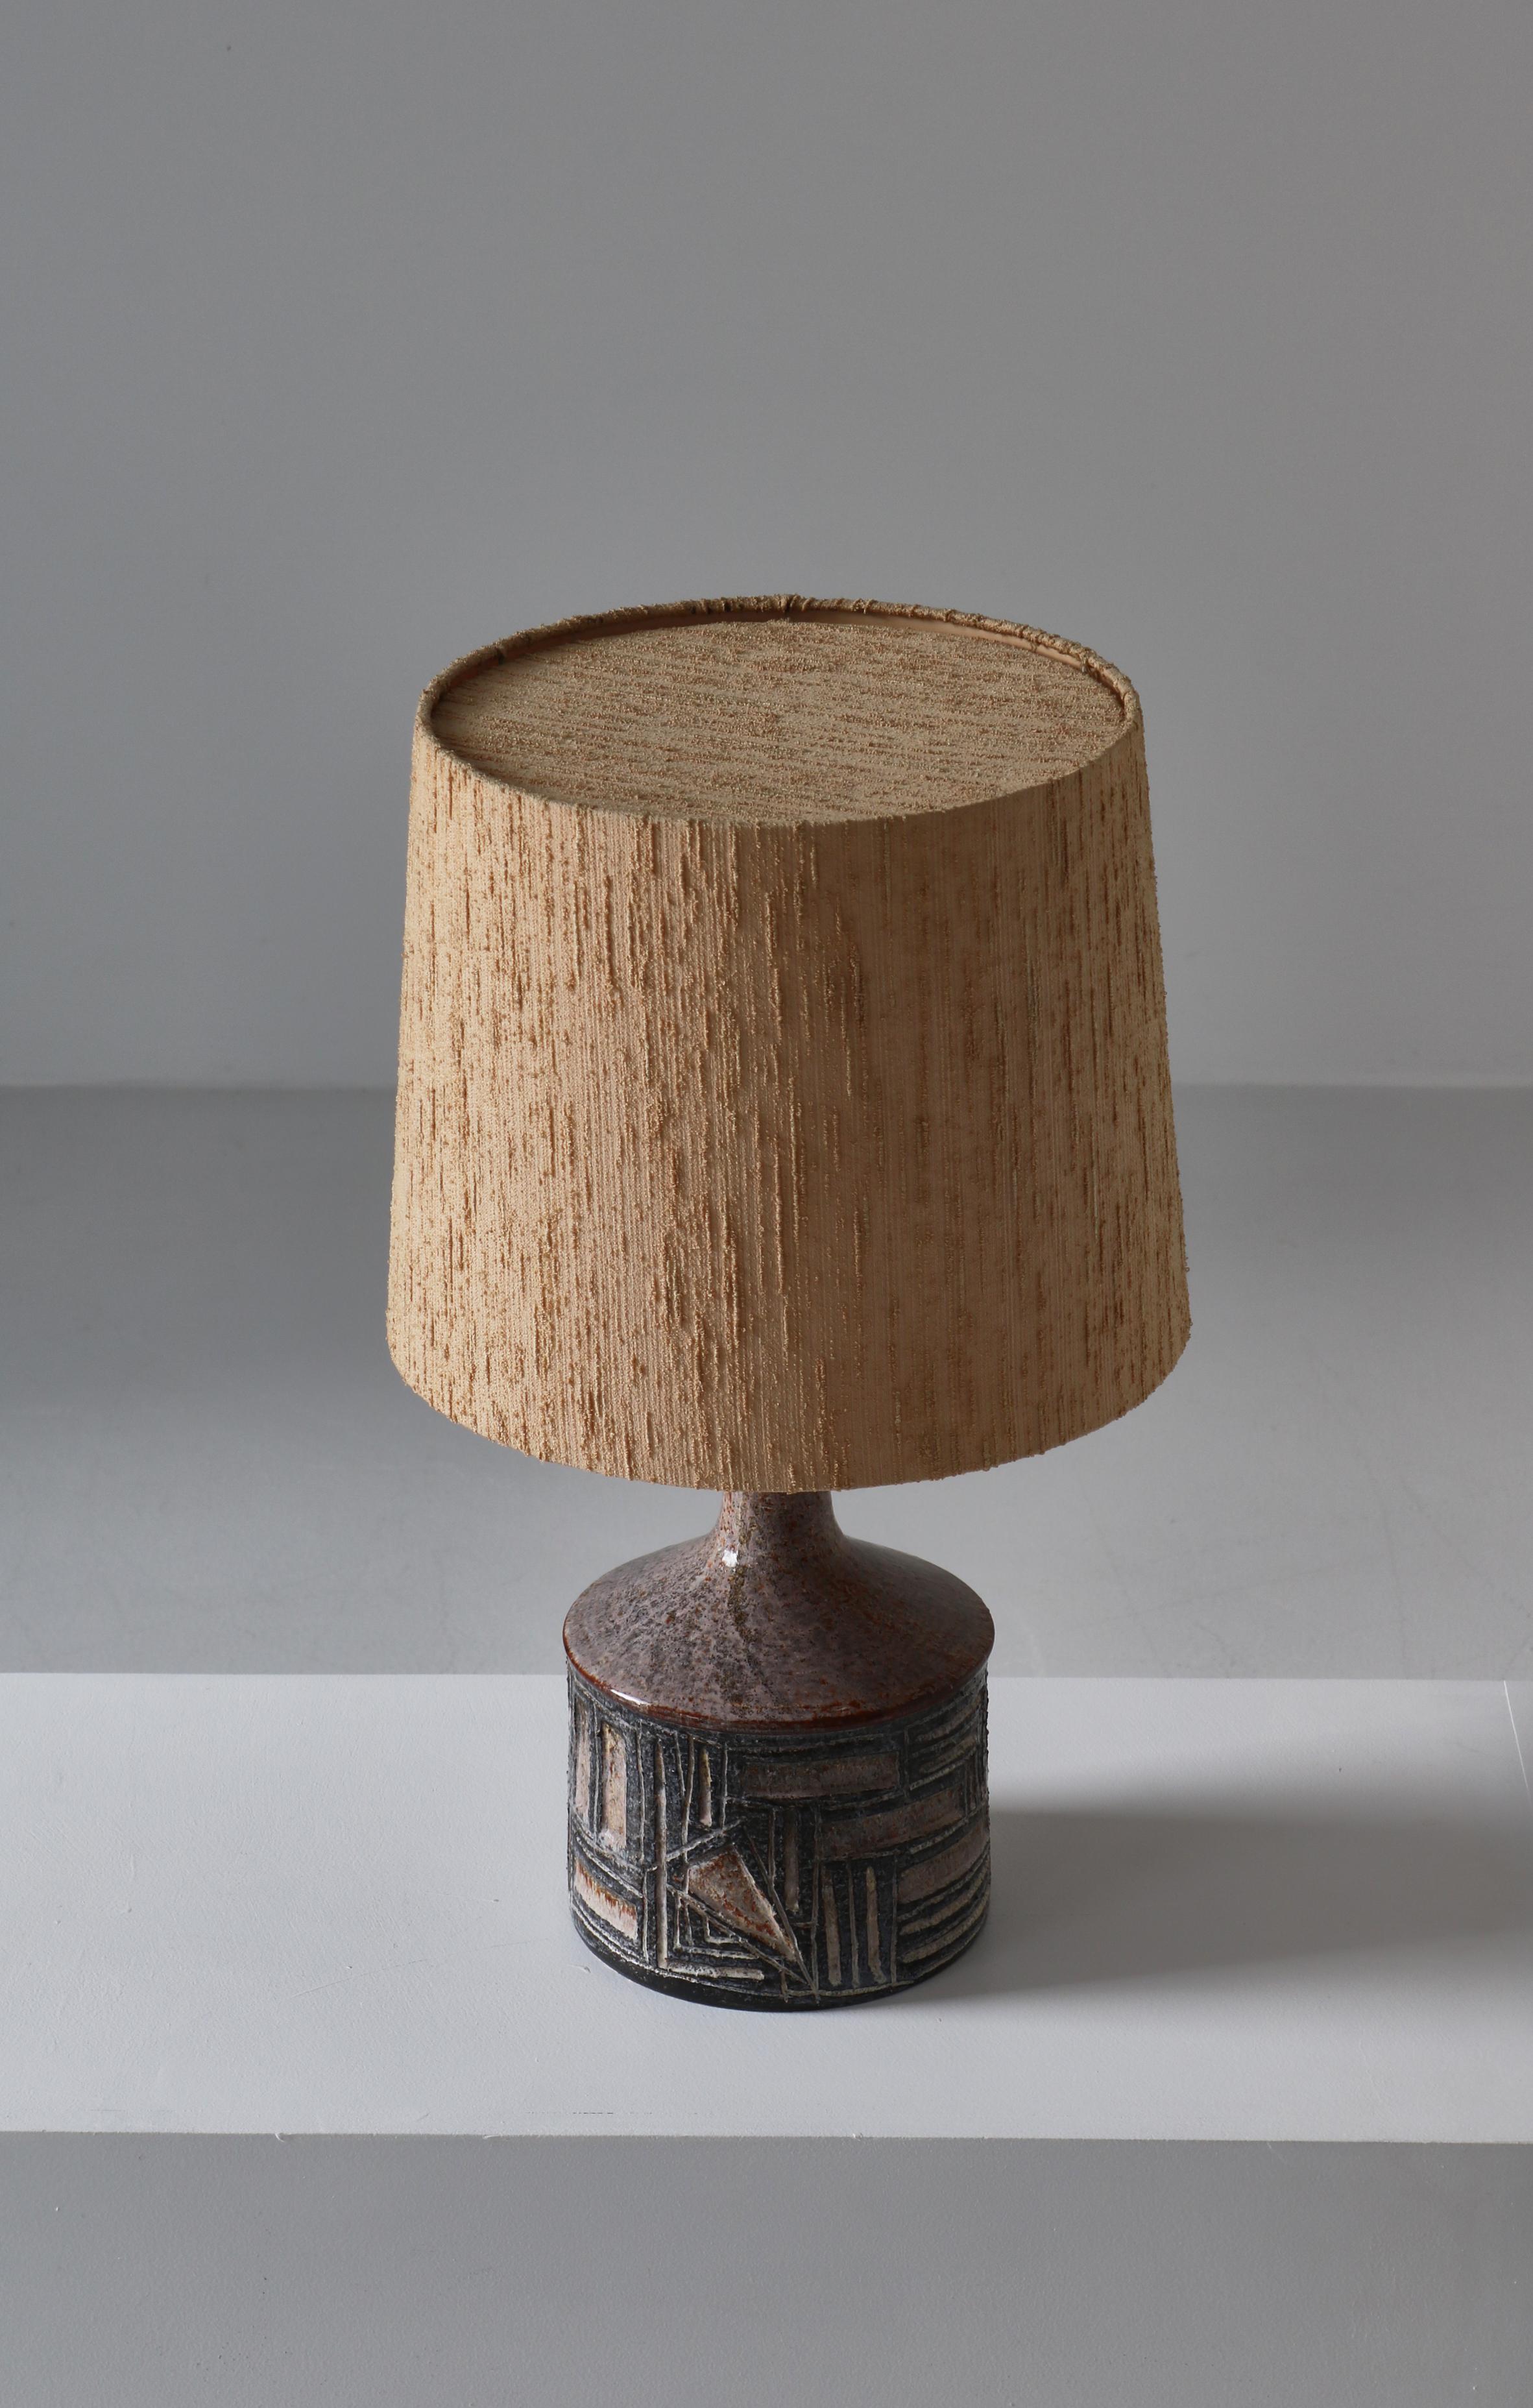 Danish Modern Ceramics Table Lamp by Jette Hellerøe at Axella Studio, 1970s For Sale 2